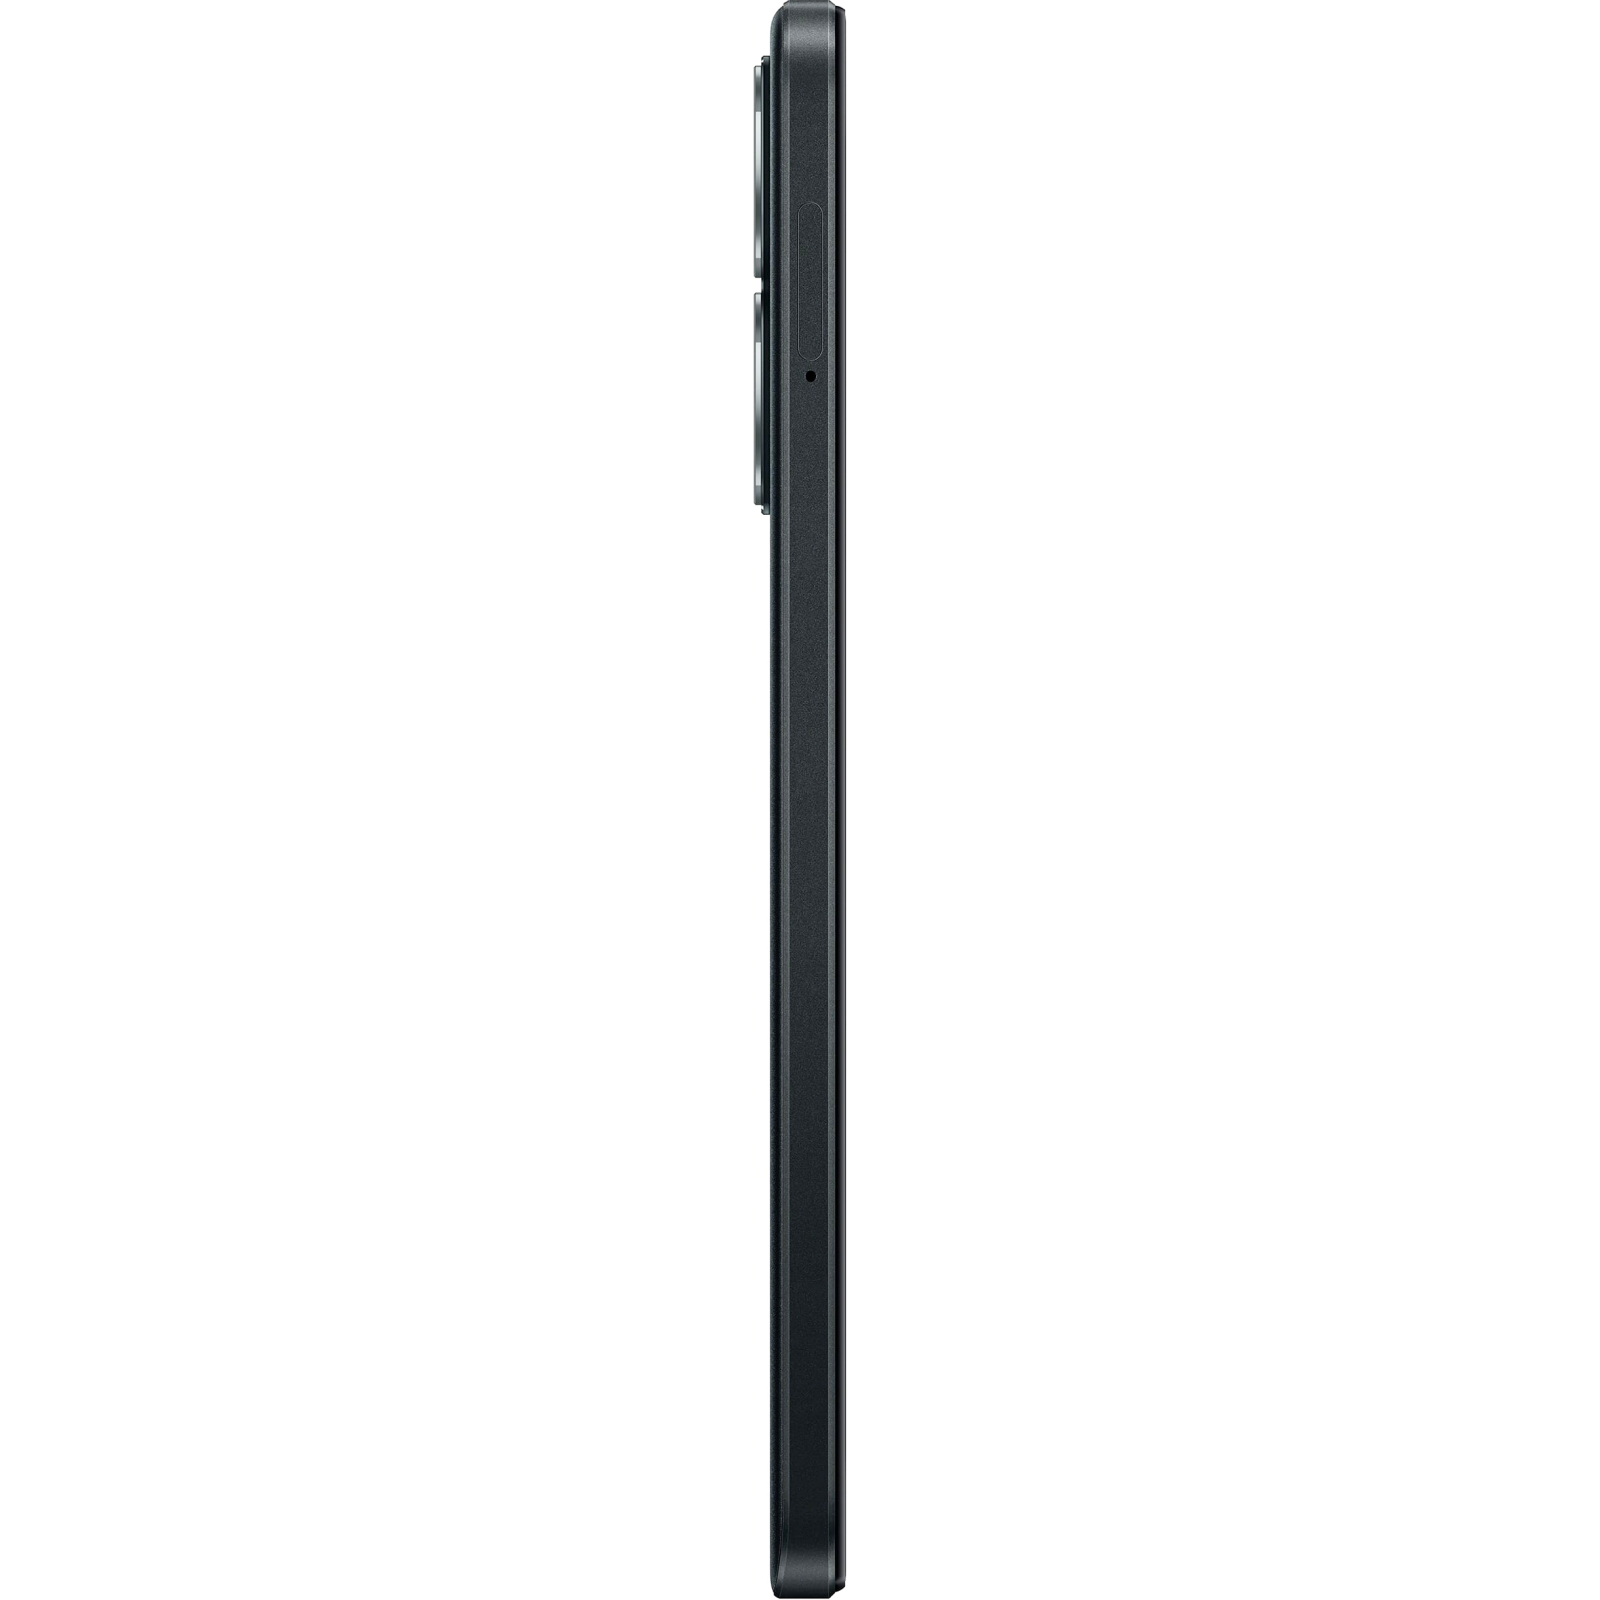 Мобильный телефон Oppo A58 6/128GB Glowing Black (OFCPH2577_BLACK_6/128) изображение 4